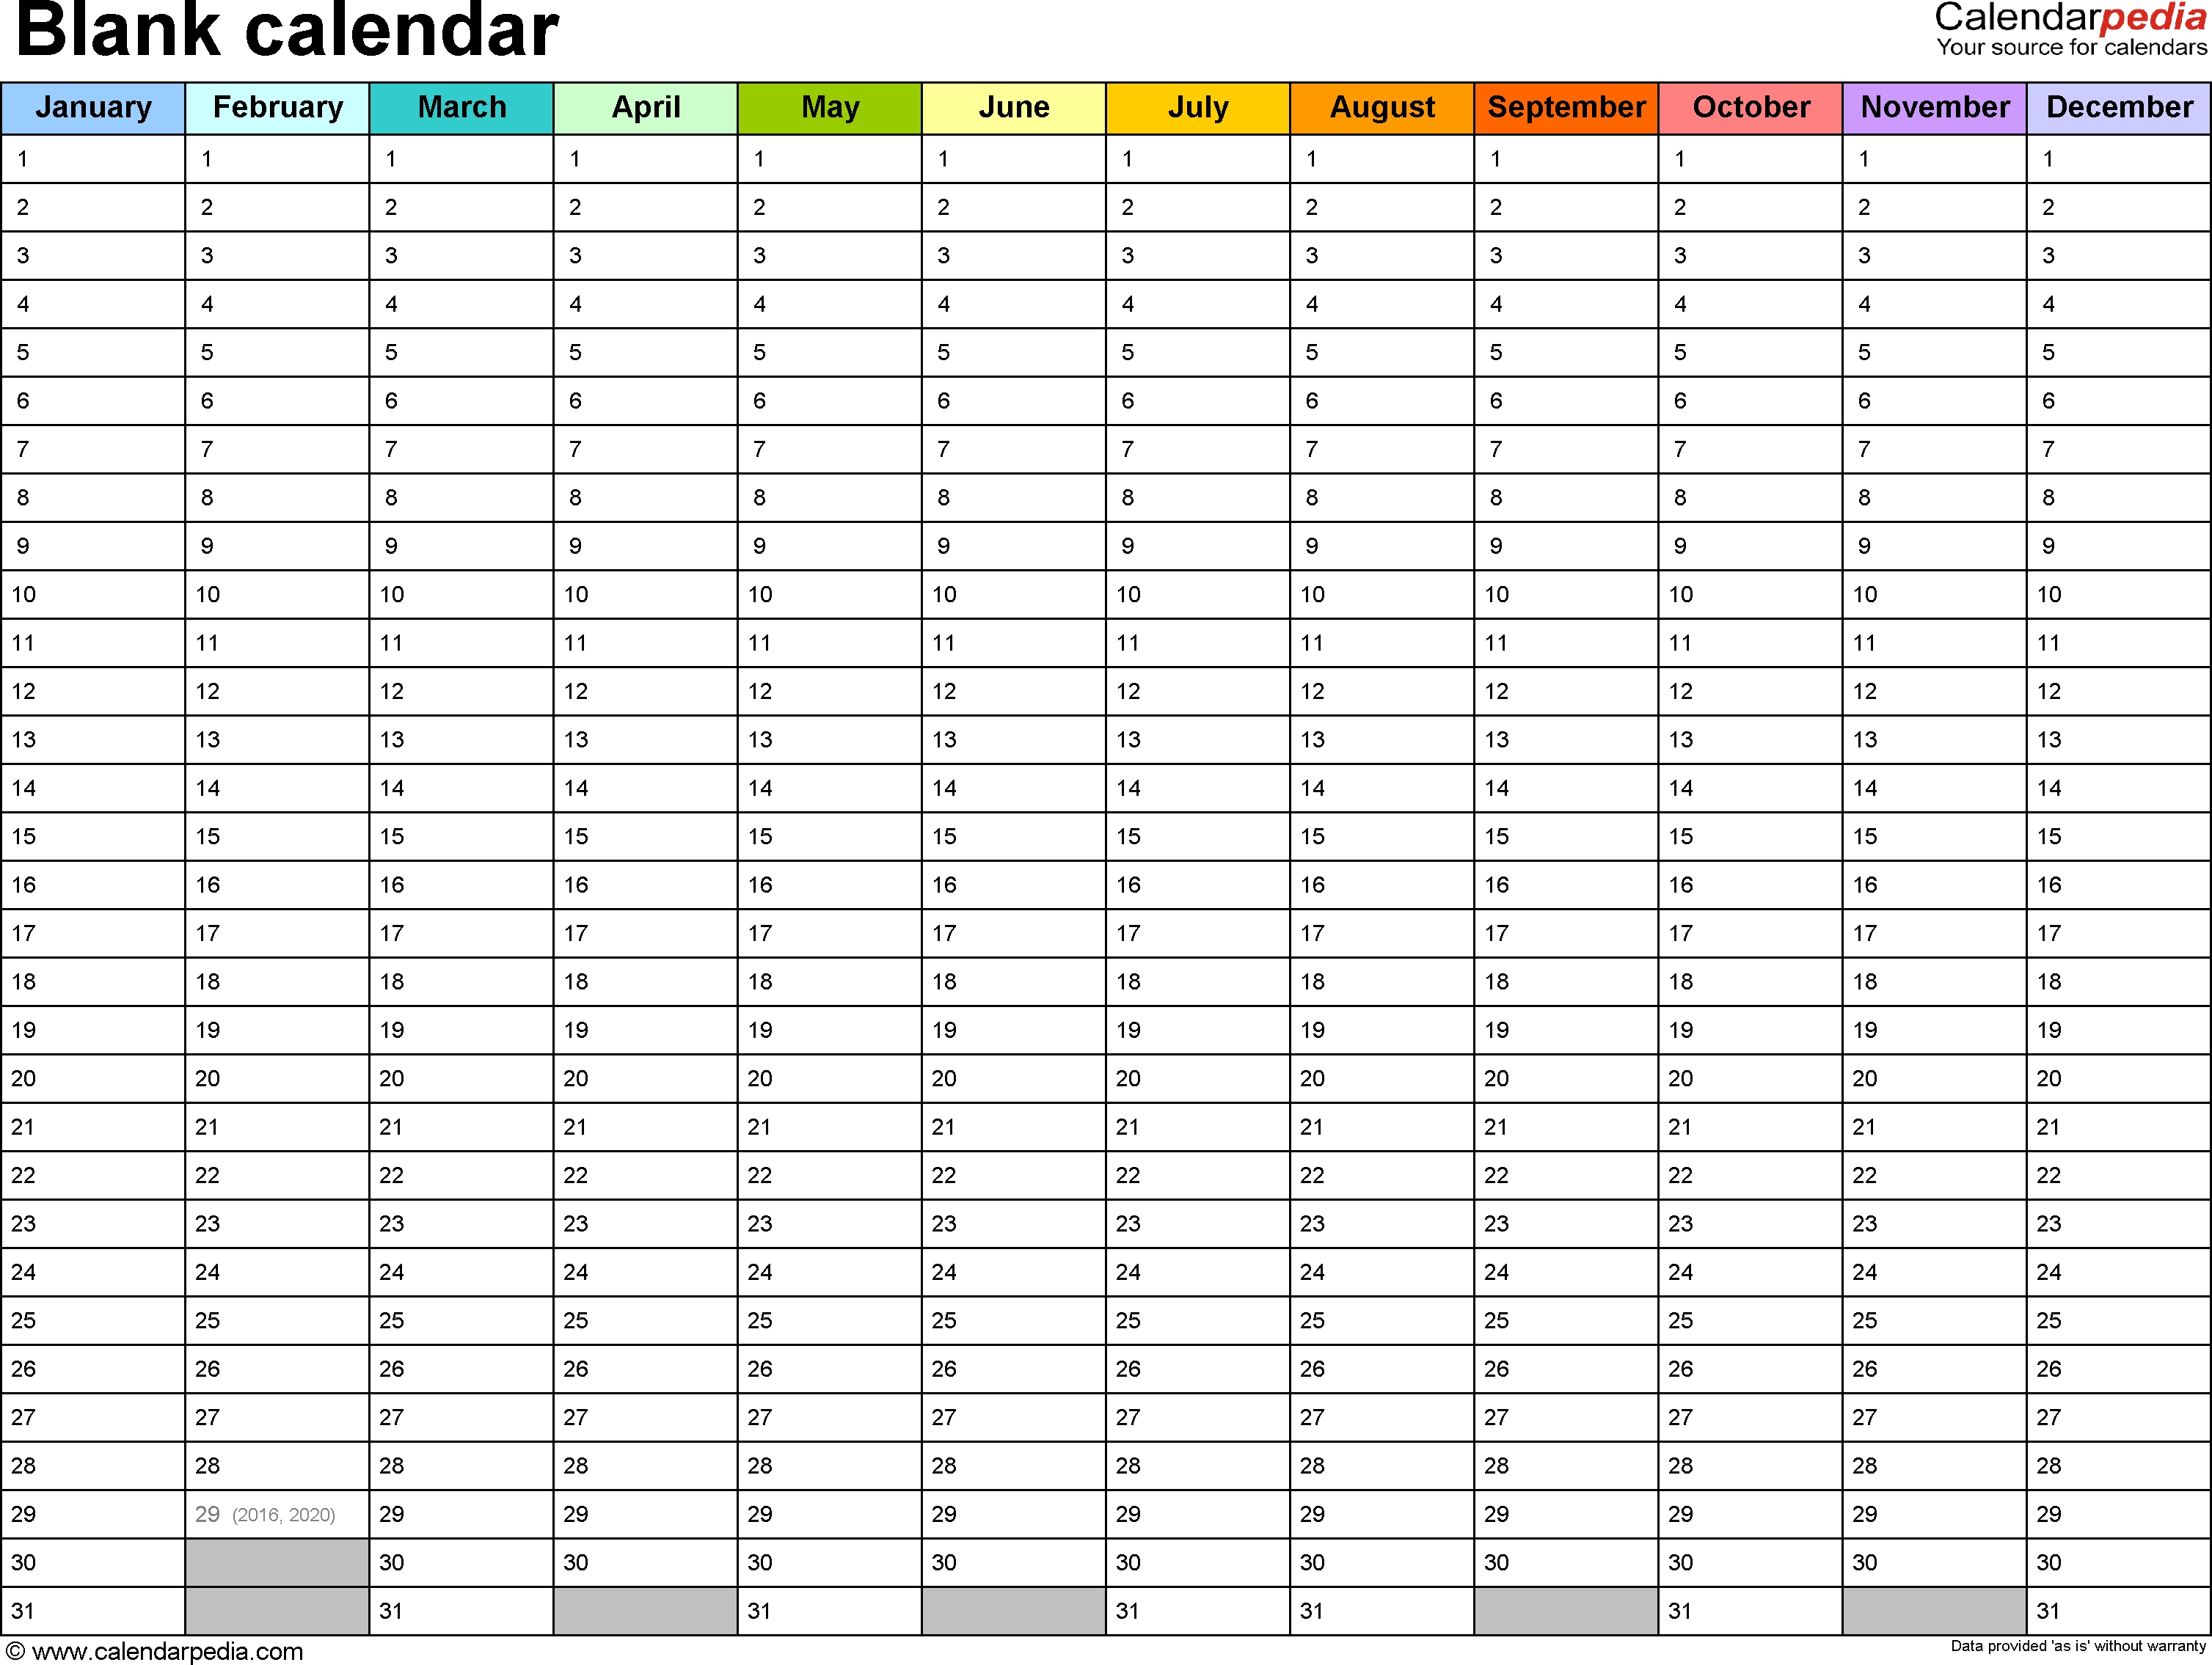 Blank Calendar - 9 Free Printable Microsoft Word Templates Calendar Template 1 Year